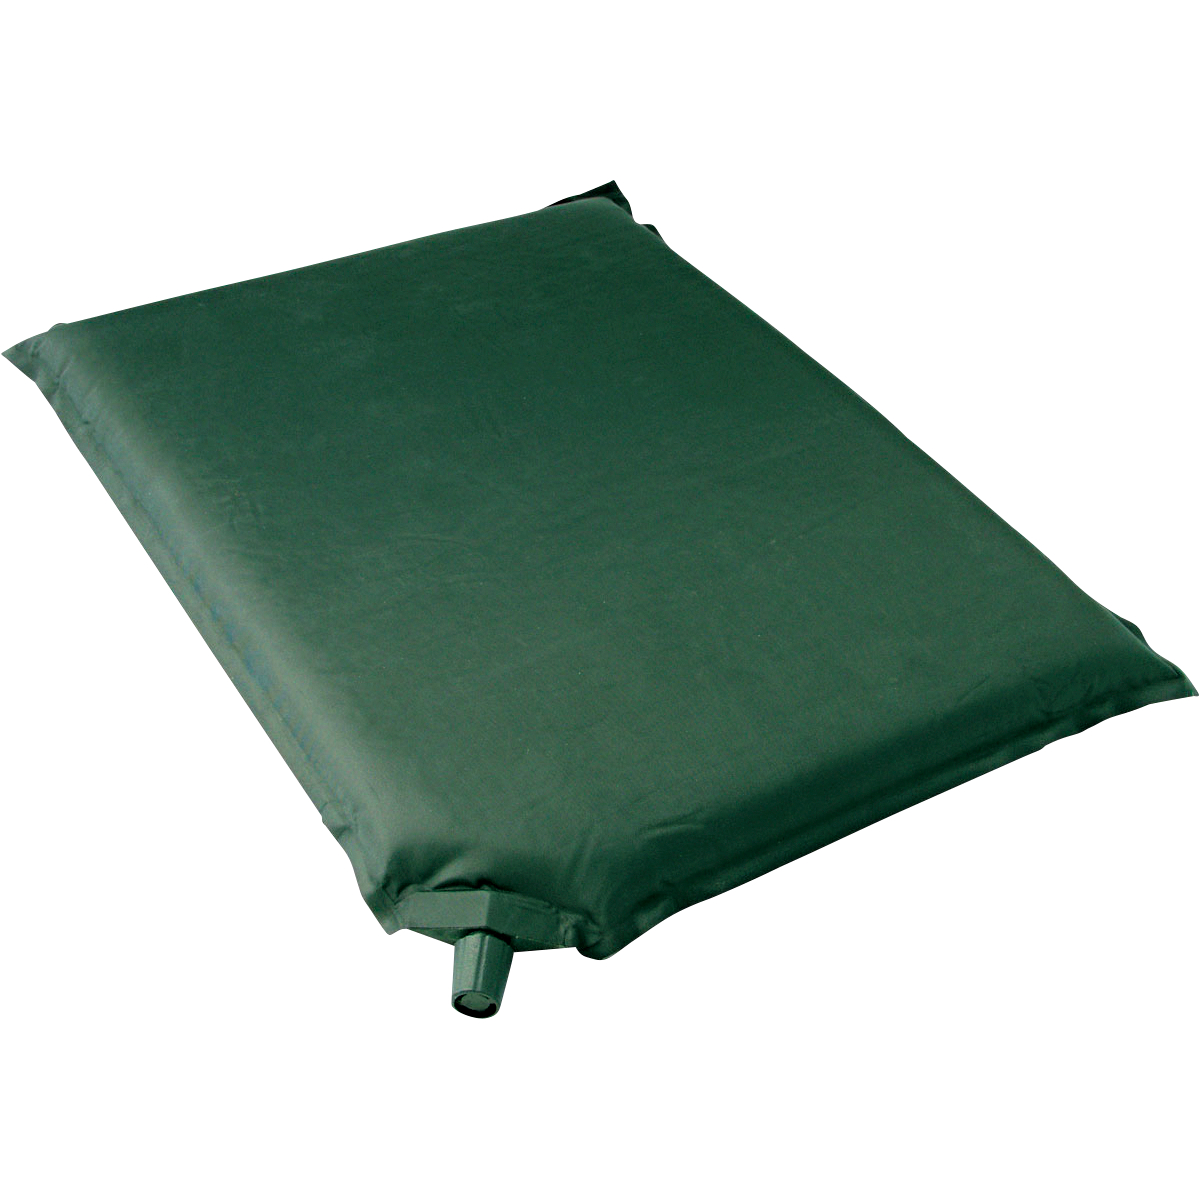 Self-inflating seat cushion 